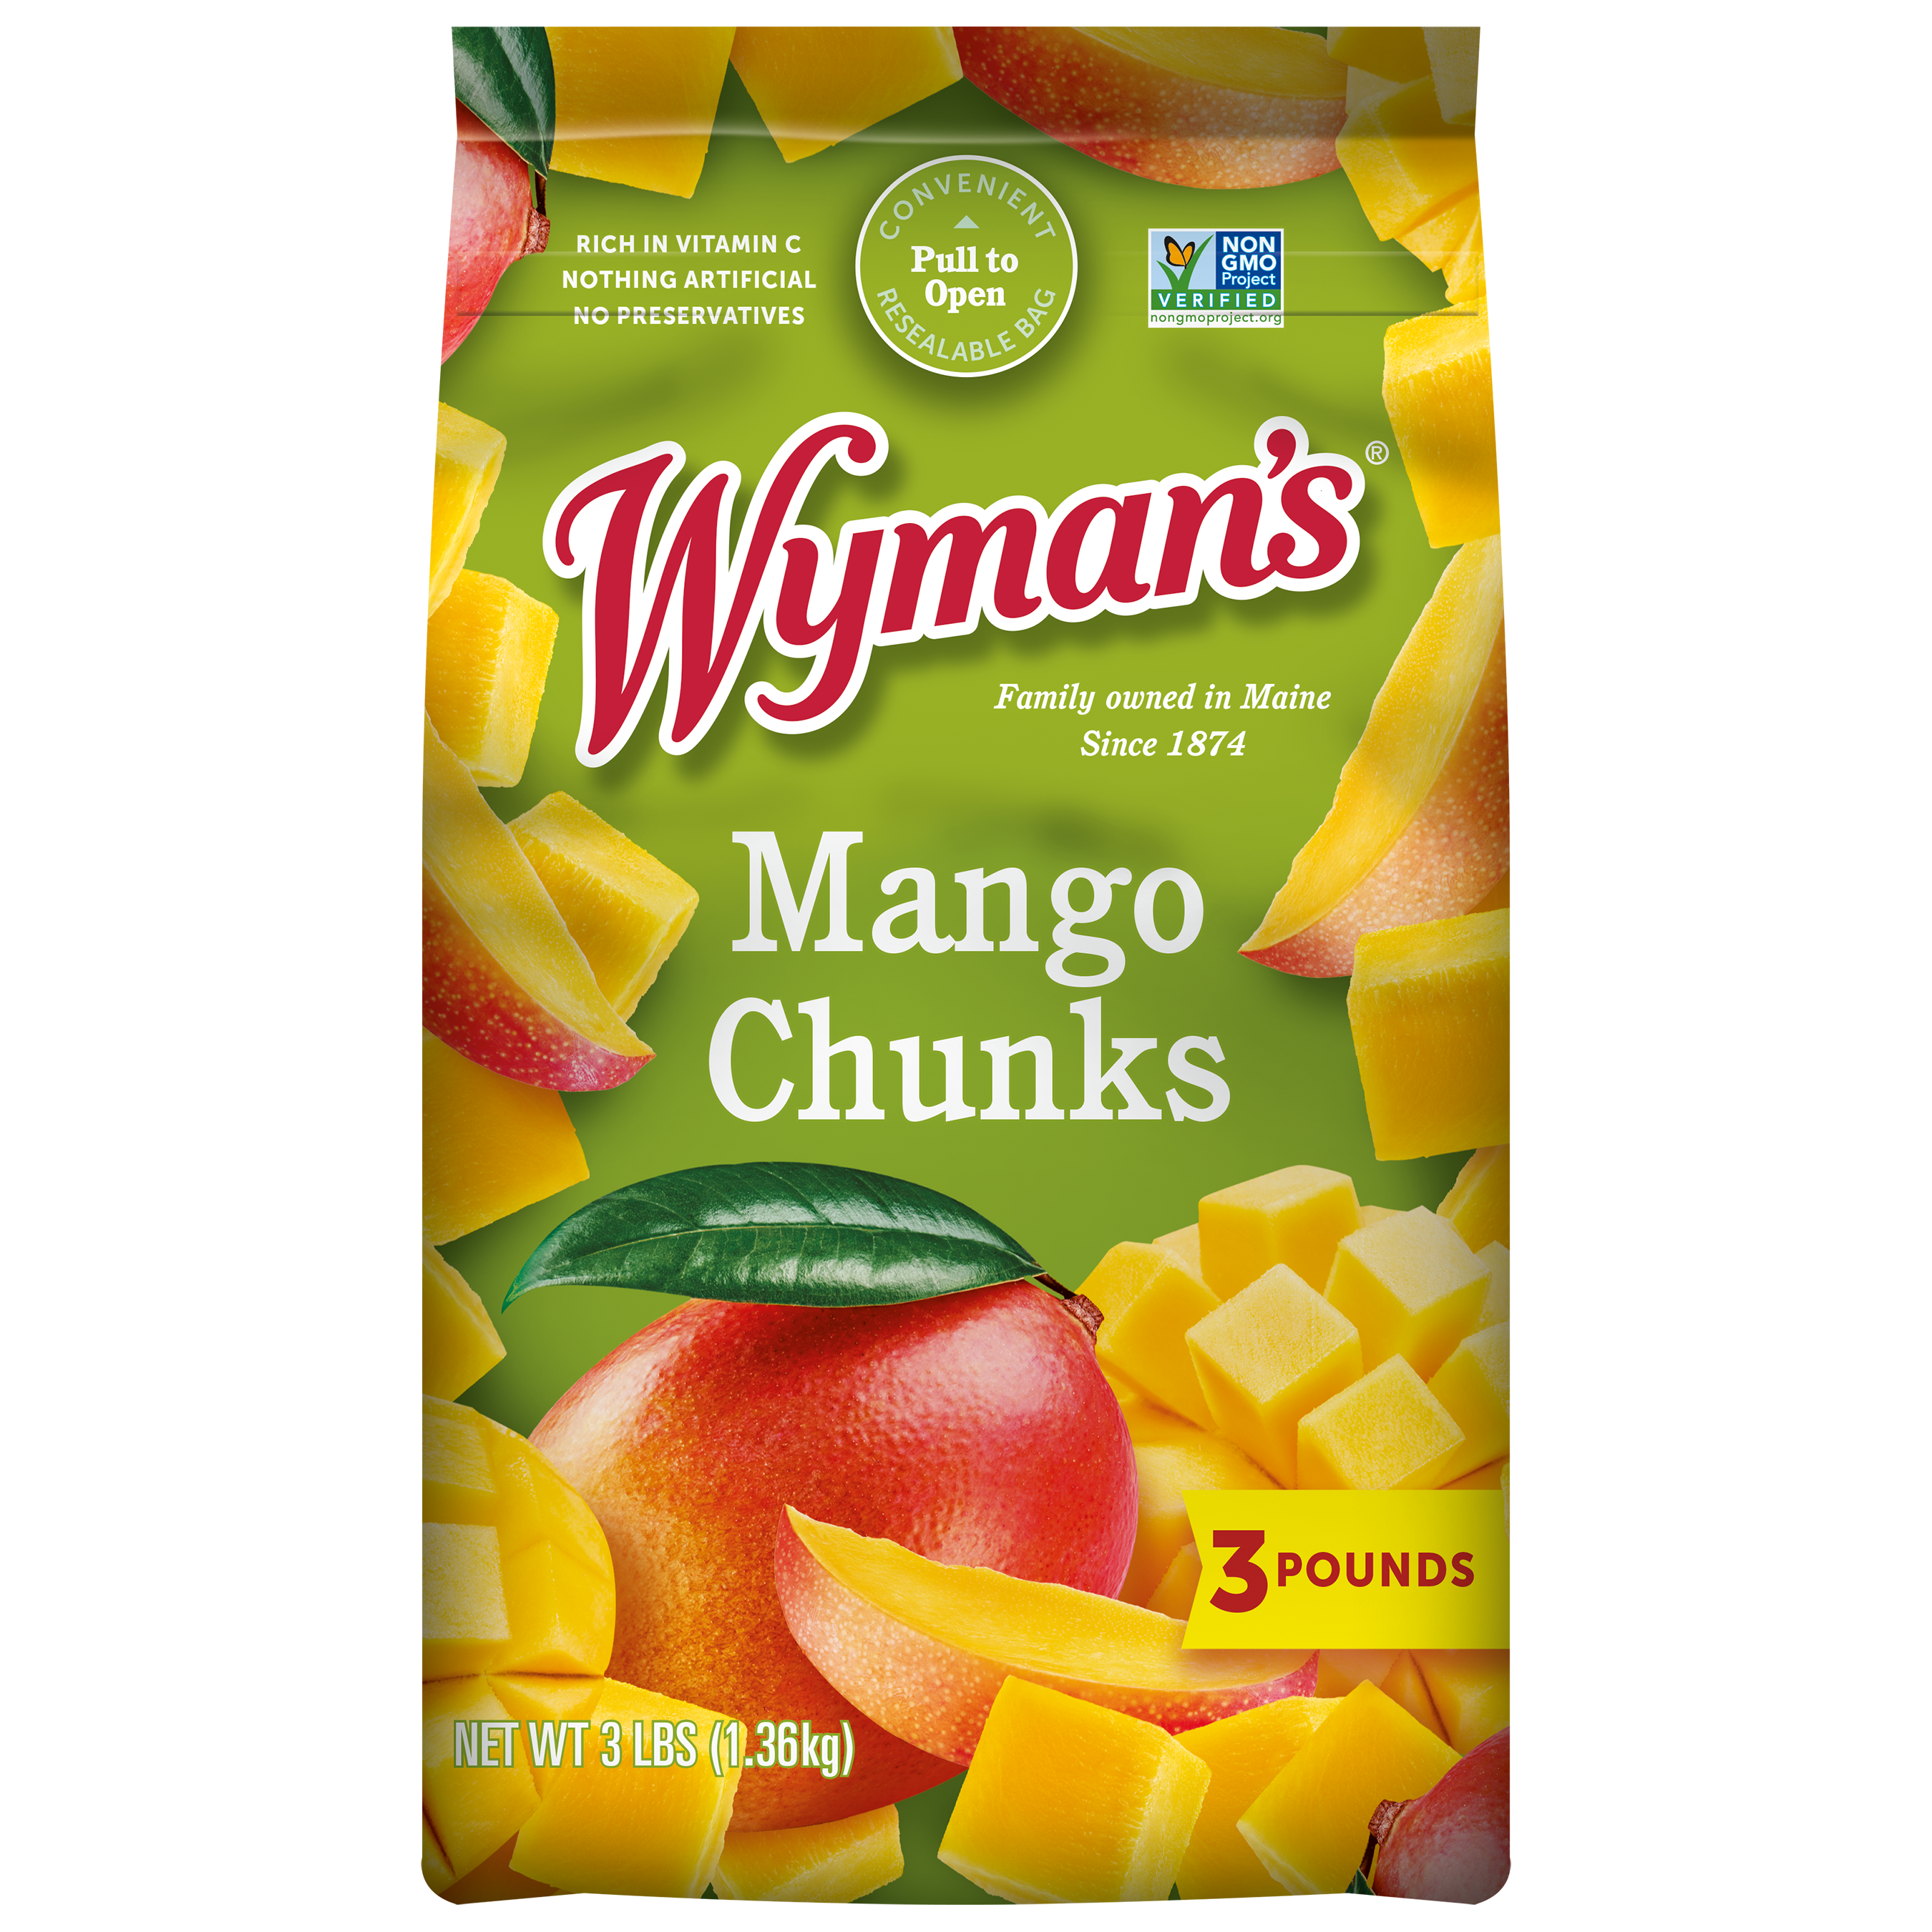 A bag of fresh-frozen Shop Wyman's mango chunks.